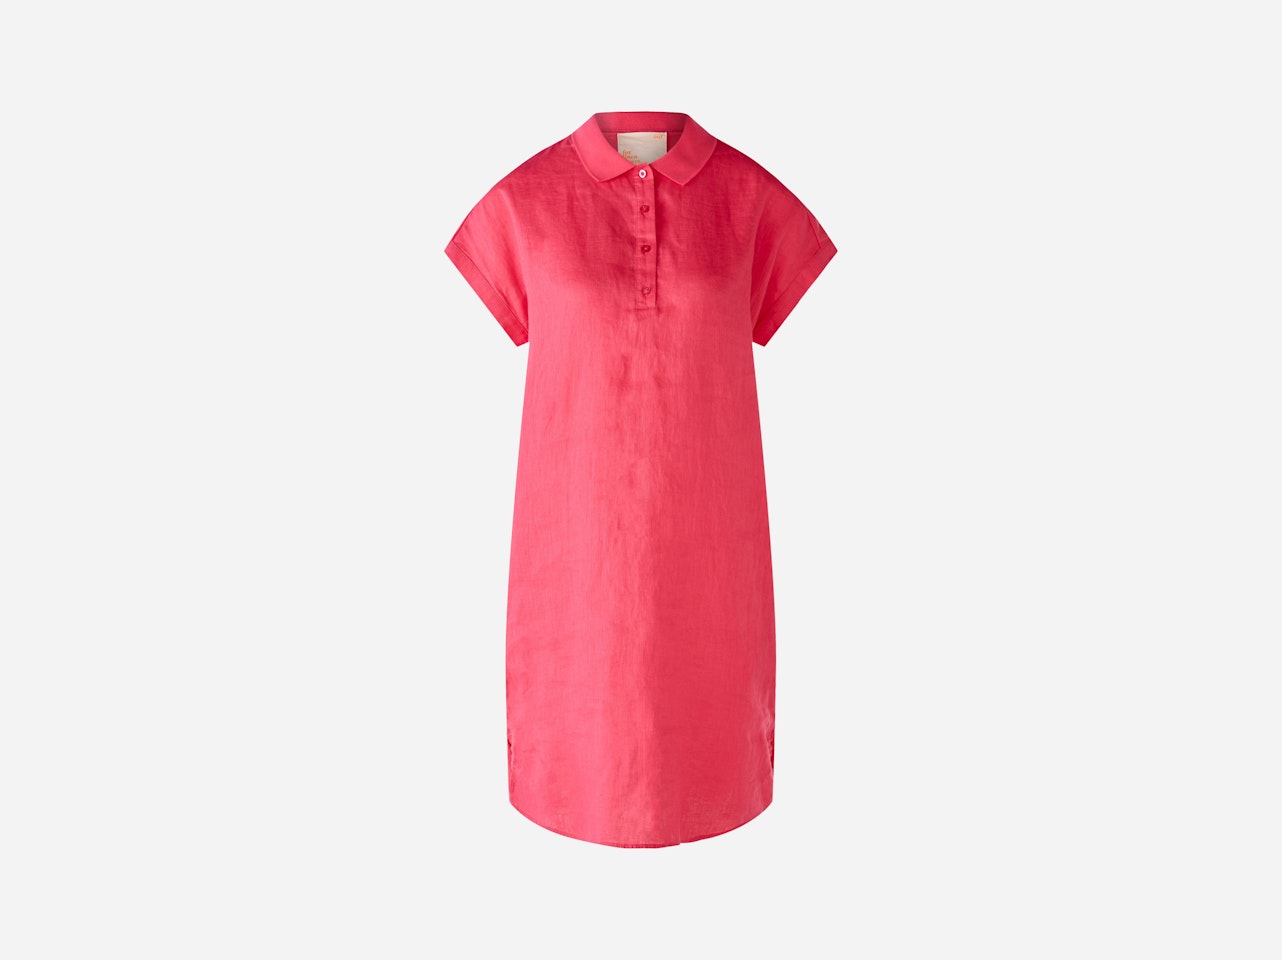 Bild 1 von Linen dress with jersey patch in raspberry sorbet | Oui